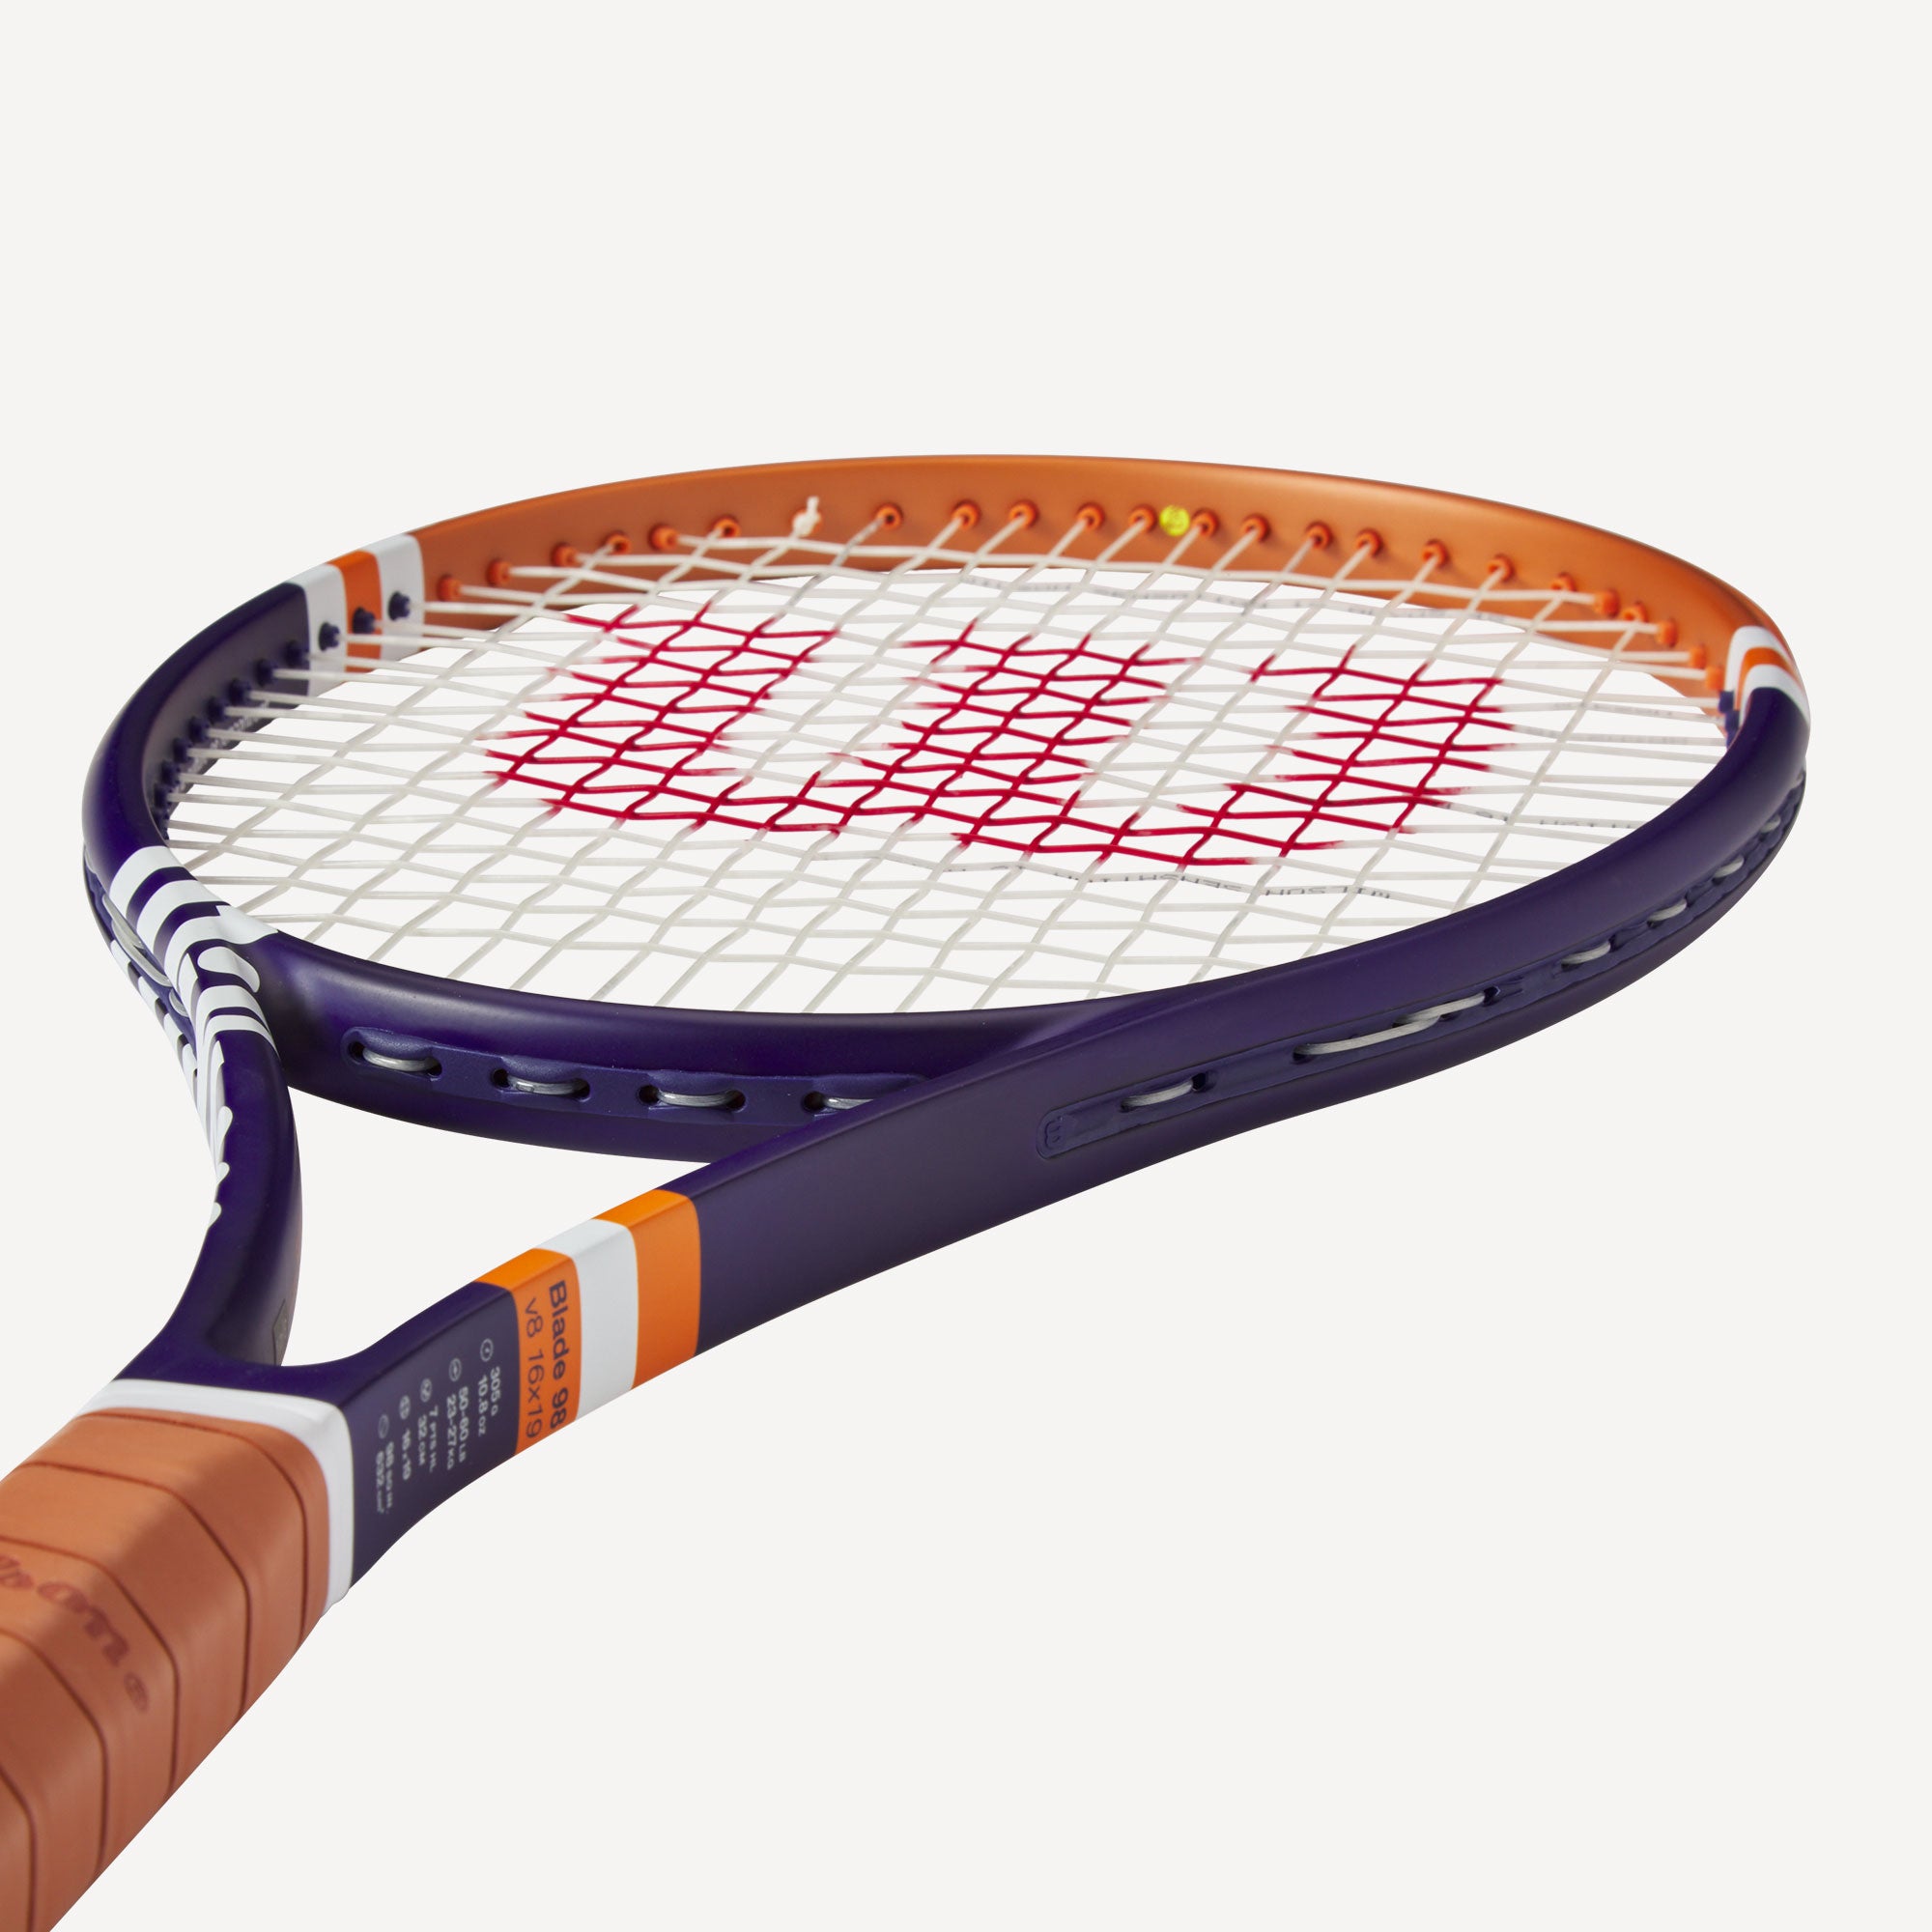 Wilson Roland-Garros Blade 98 16x19 V8 Tennis Racket (5)